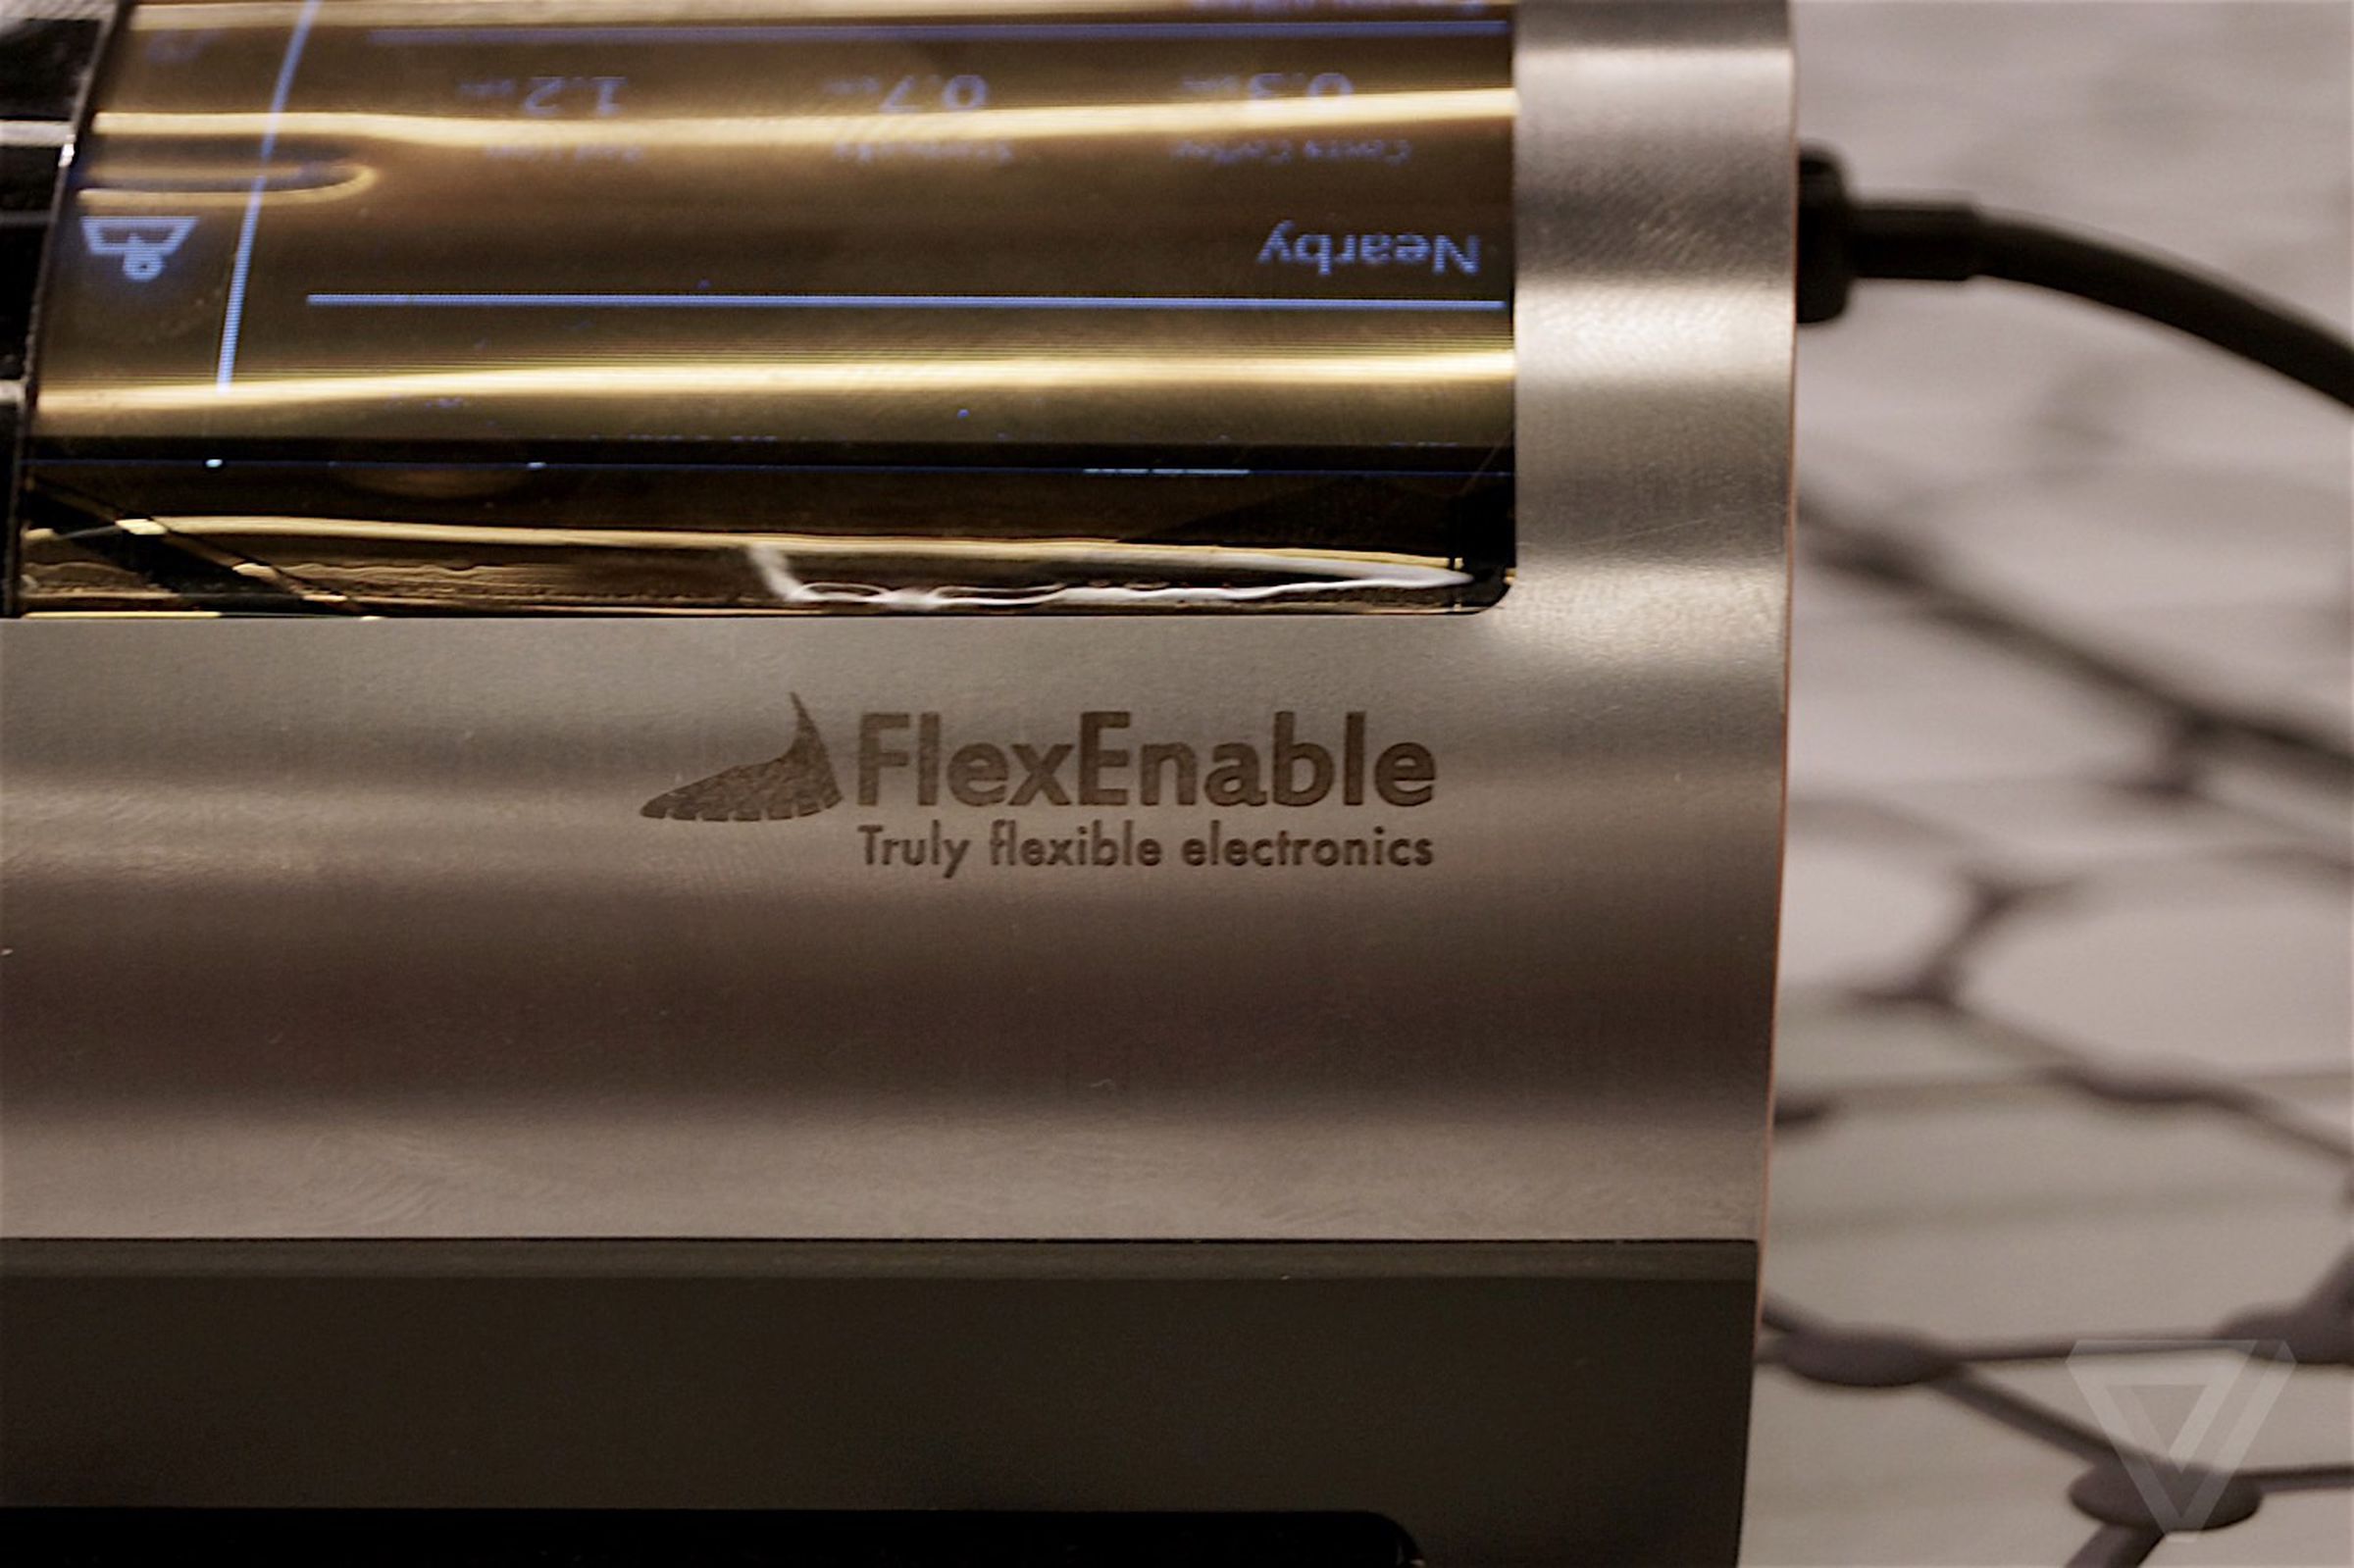 FlexEnable's flexible wrist computer